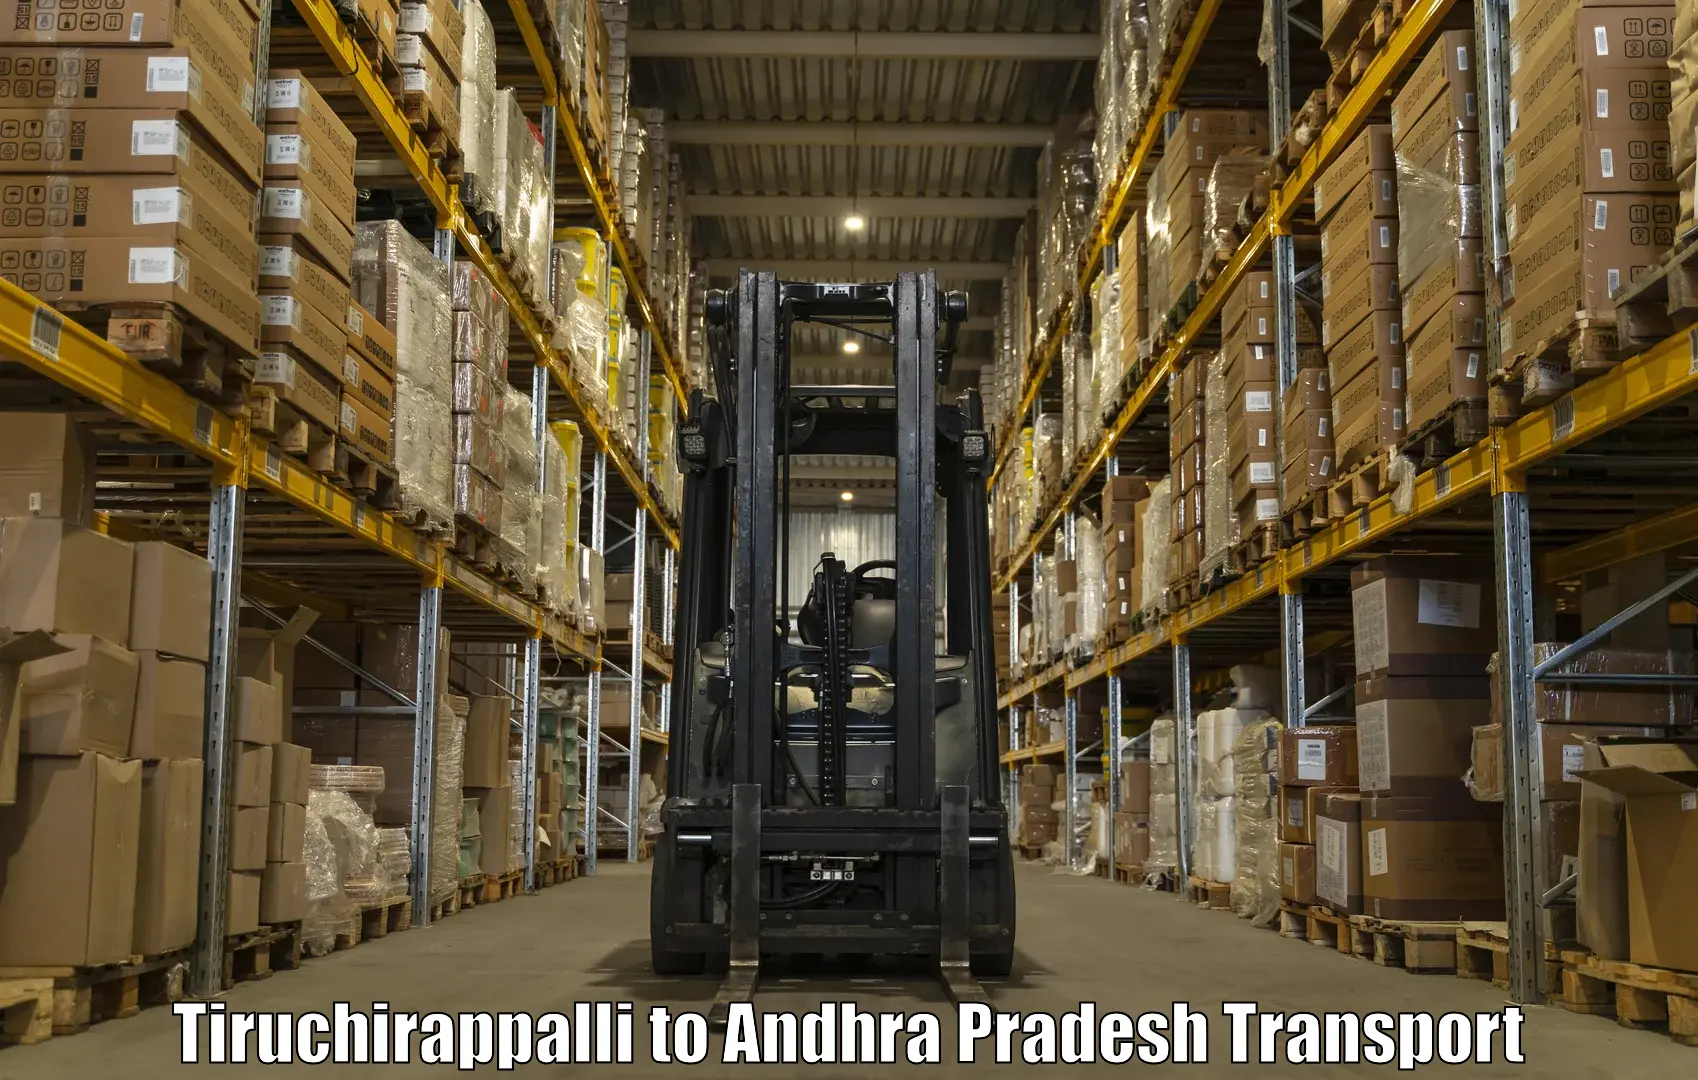 Truck transport companies in India Tiruchirappalli to Sattenapalle